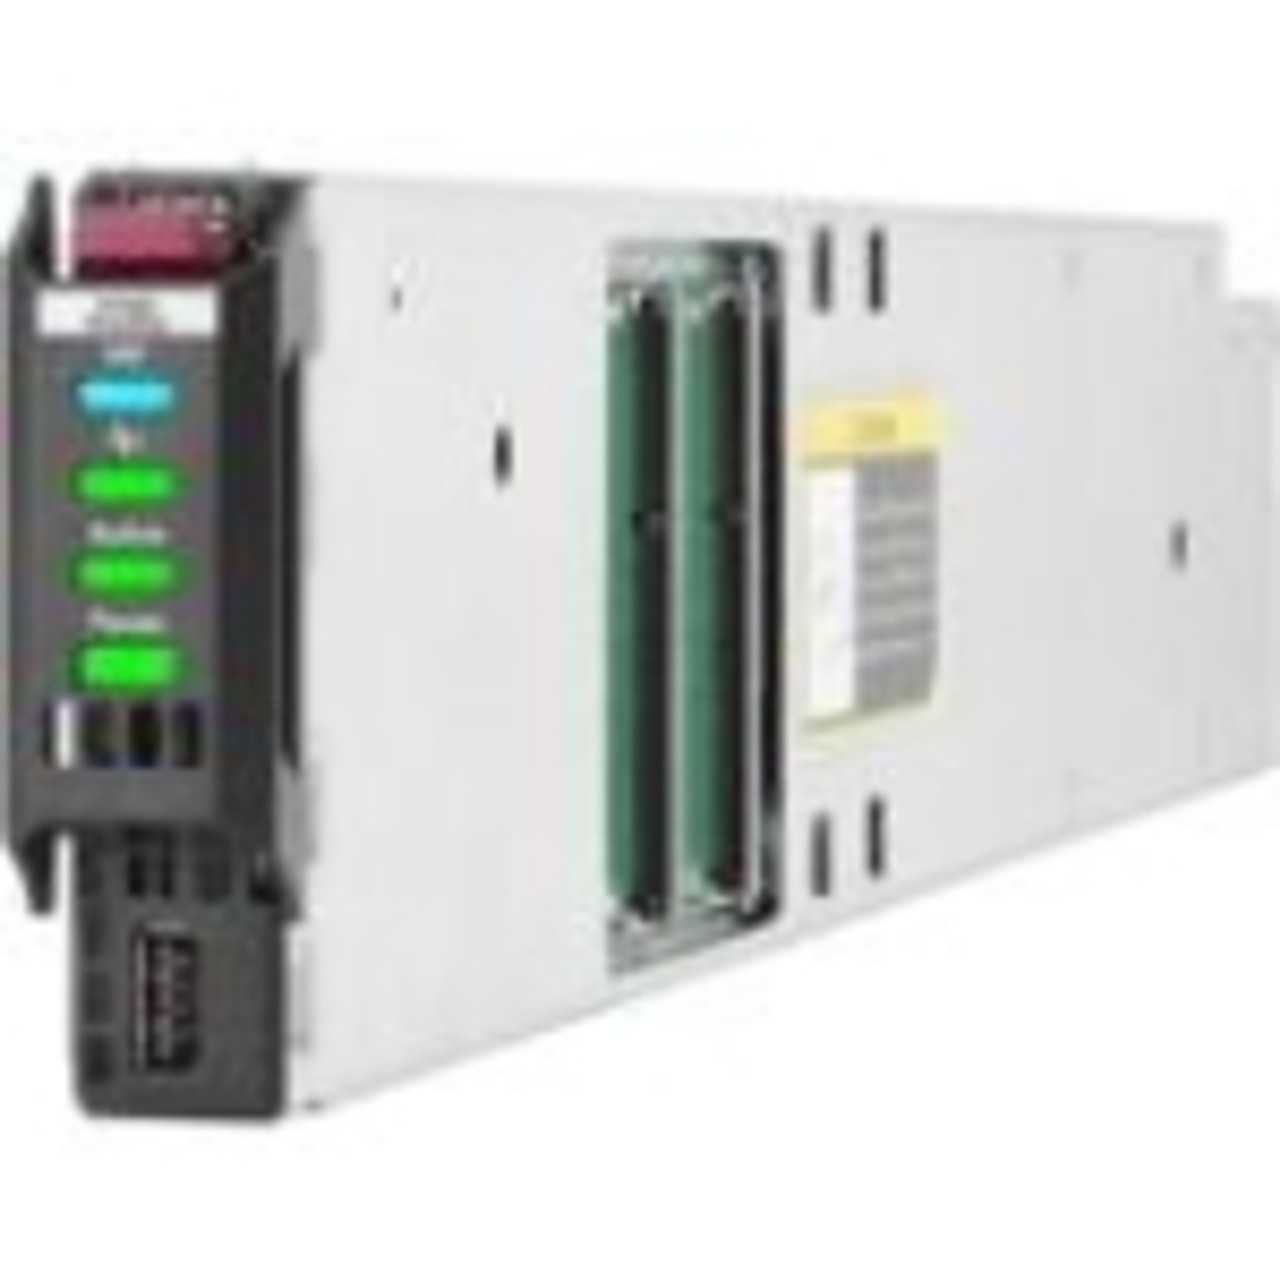 804937-B21 HP Synergy Image Streamer Environmental Monitoring